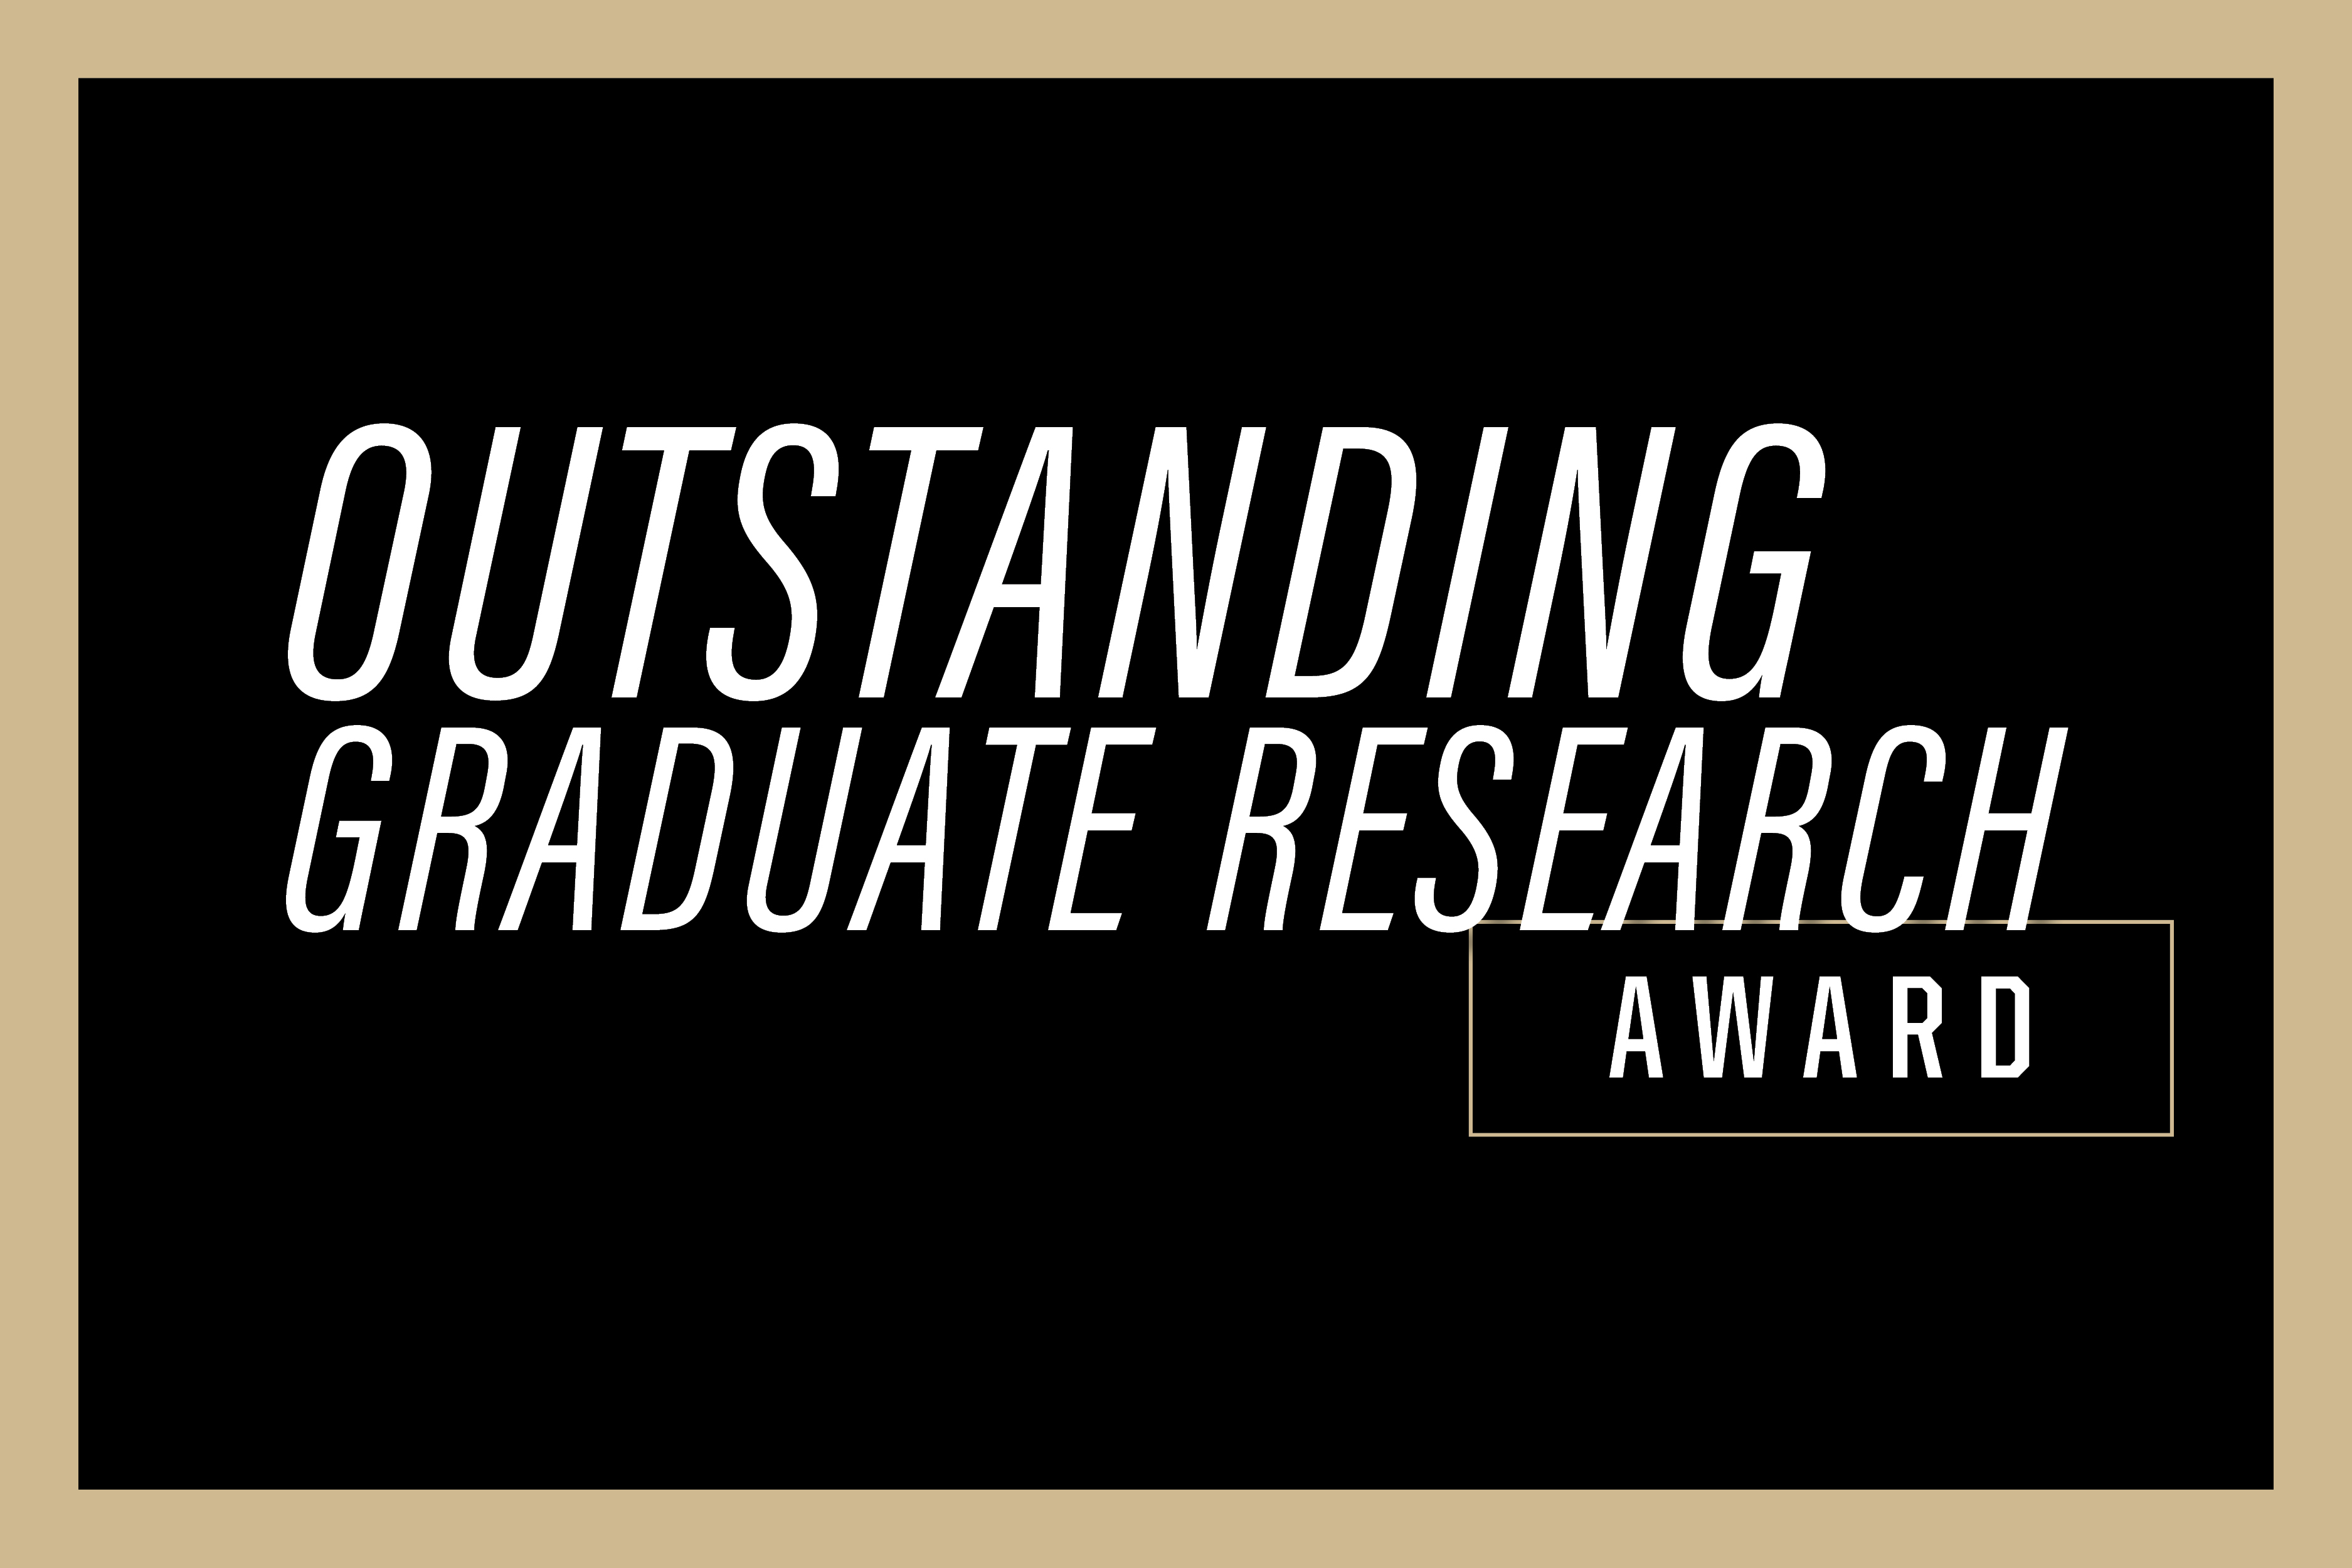 graduate student research award